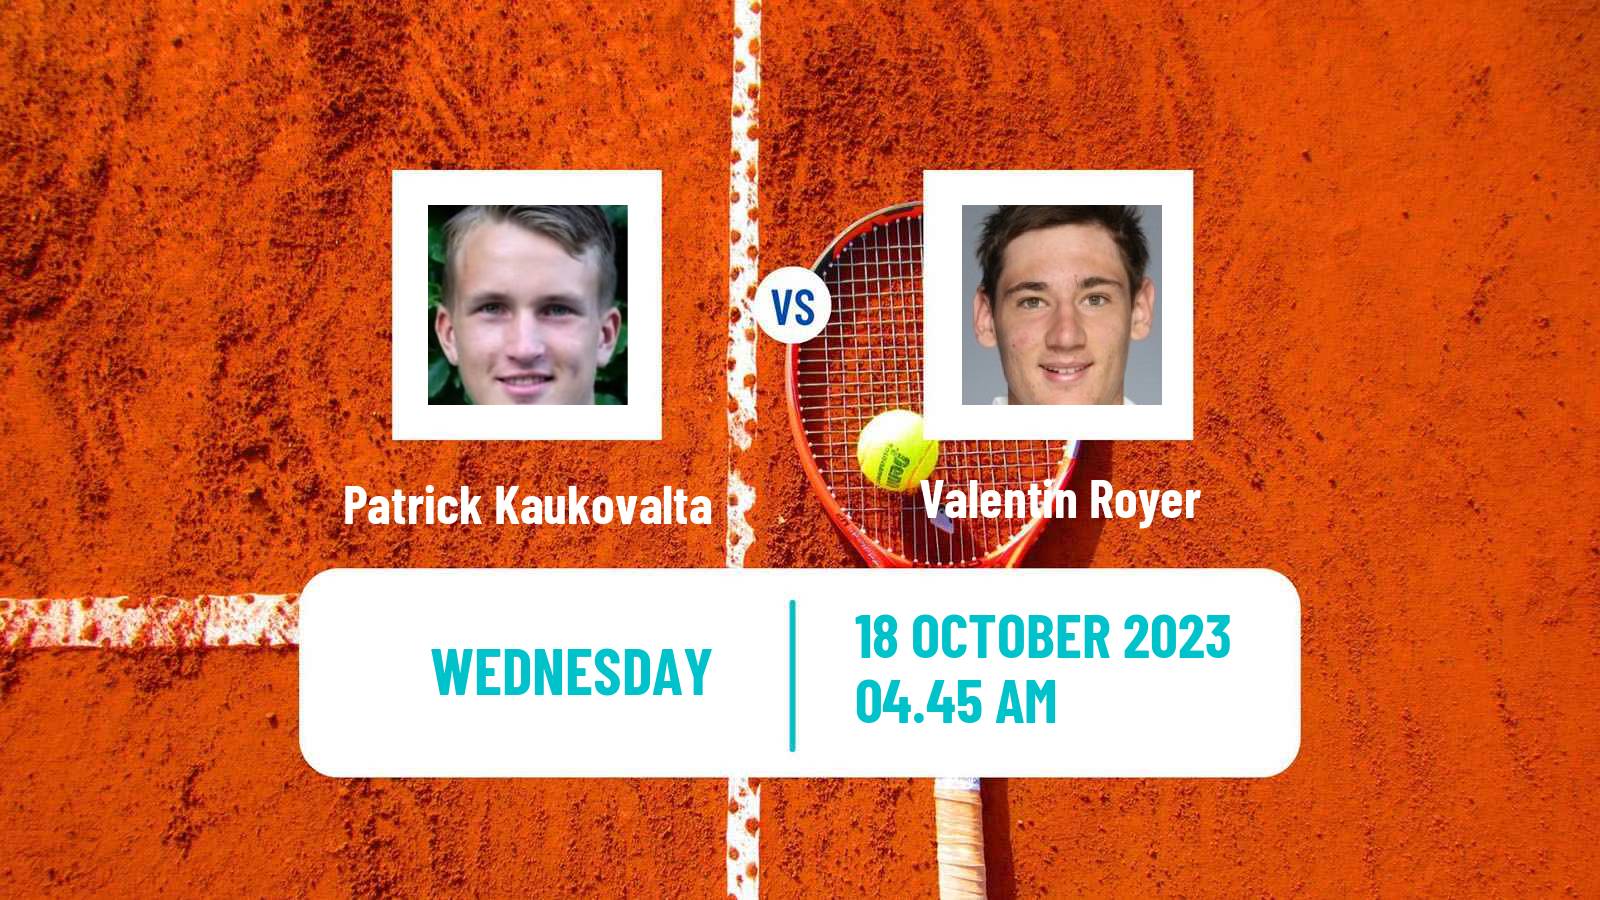 Tennis ITF M25 Tavira 2 Men Patrick Kaukovalta - Valentin Royer